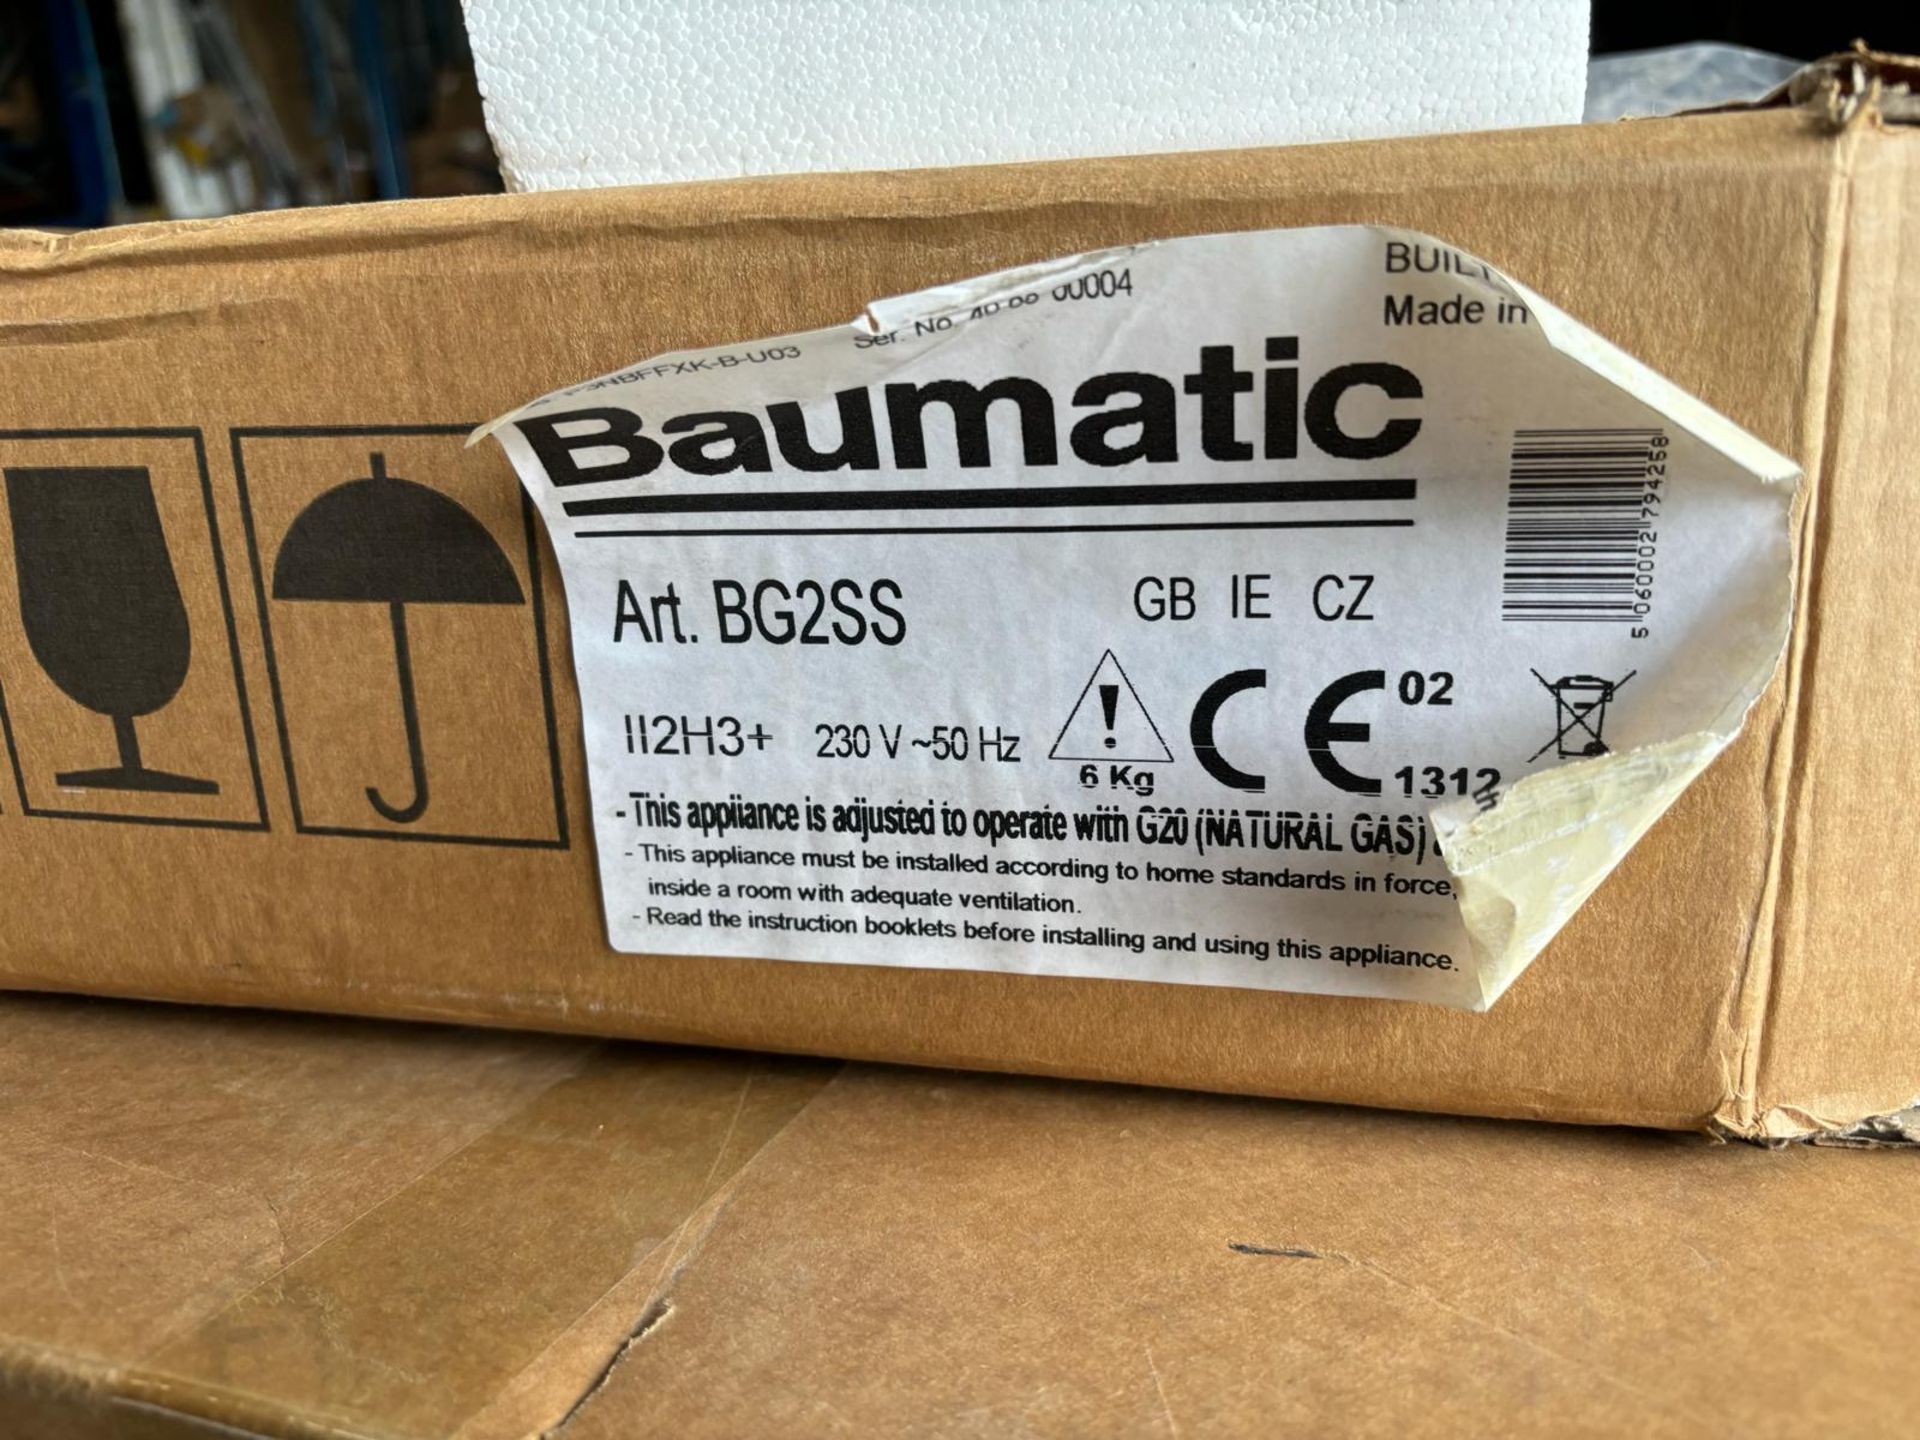 Brand New Boxed Baumatic 2 Ring Gas Hob RRP £279